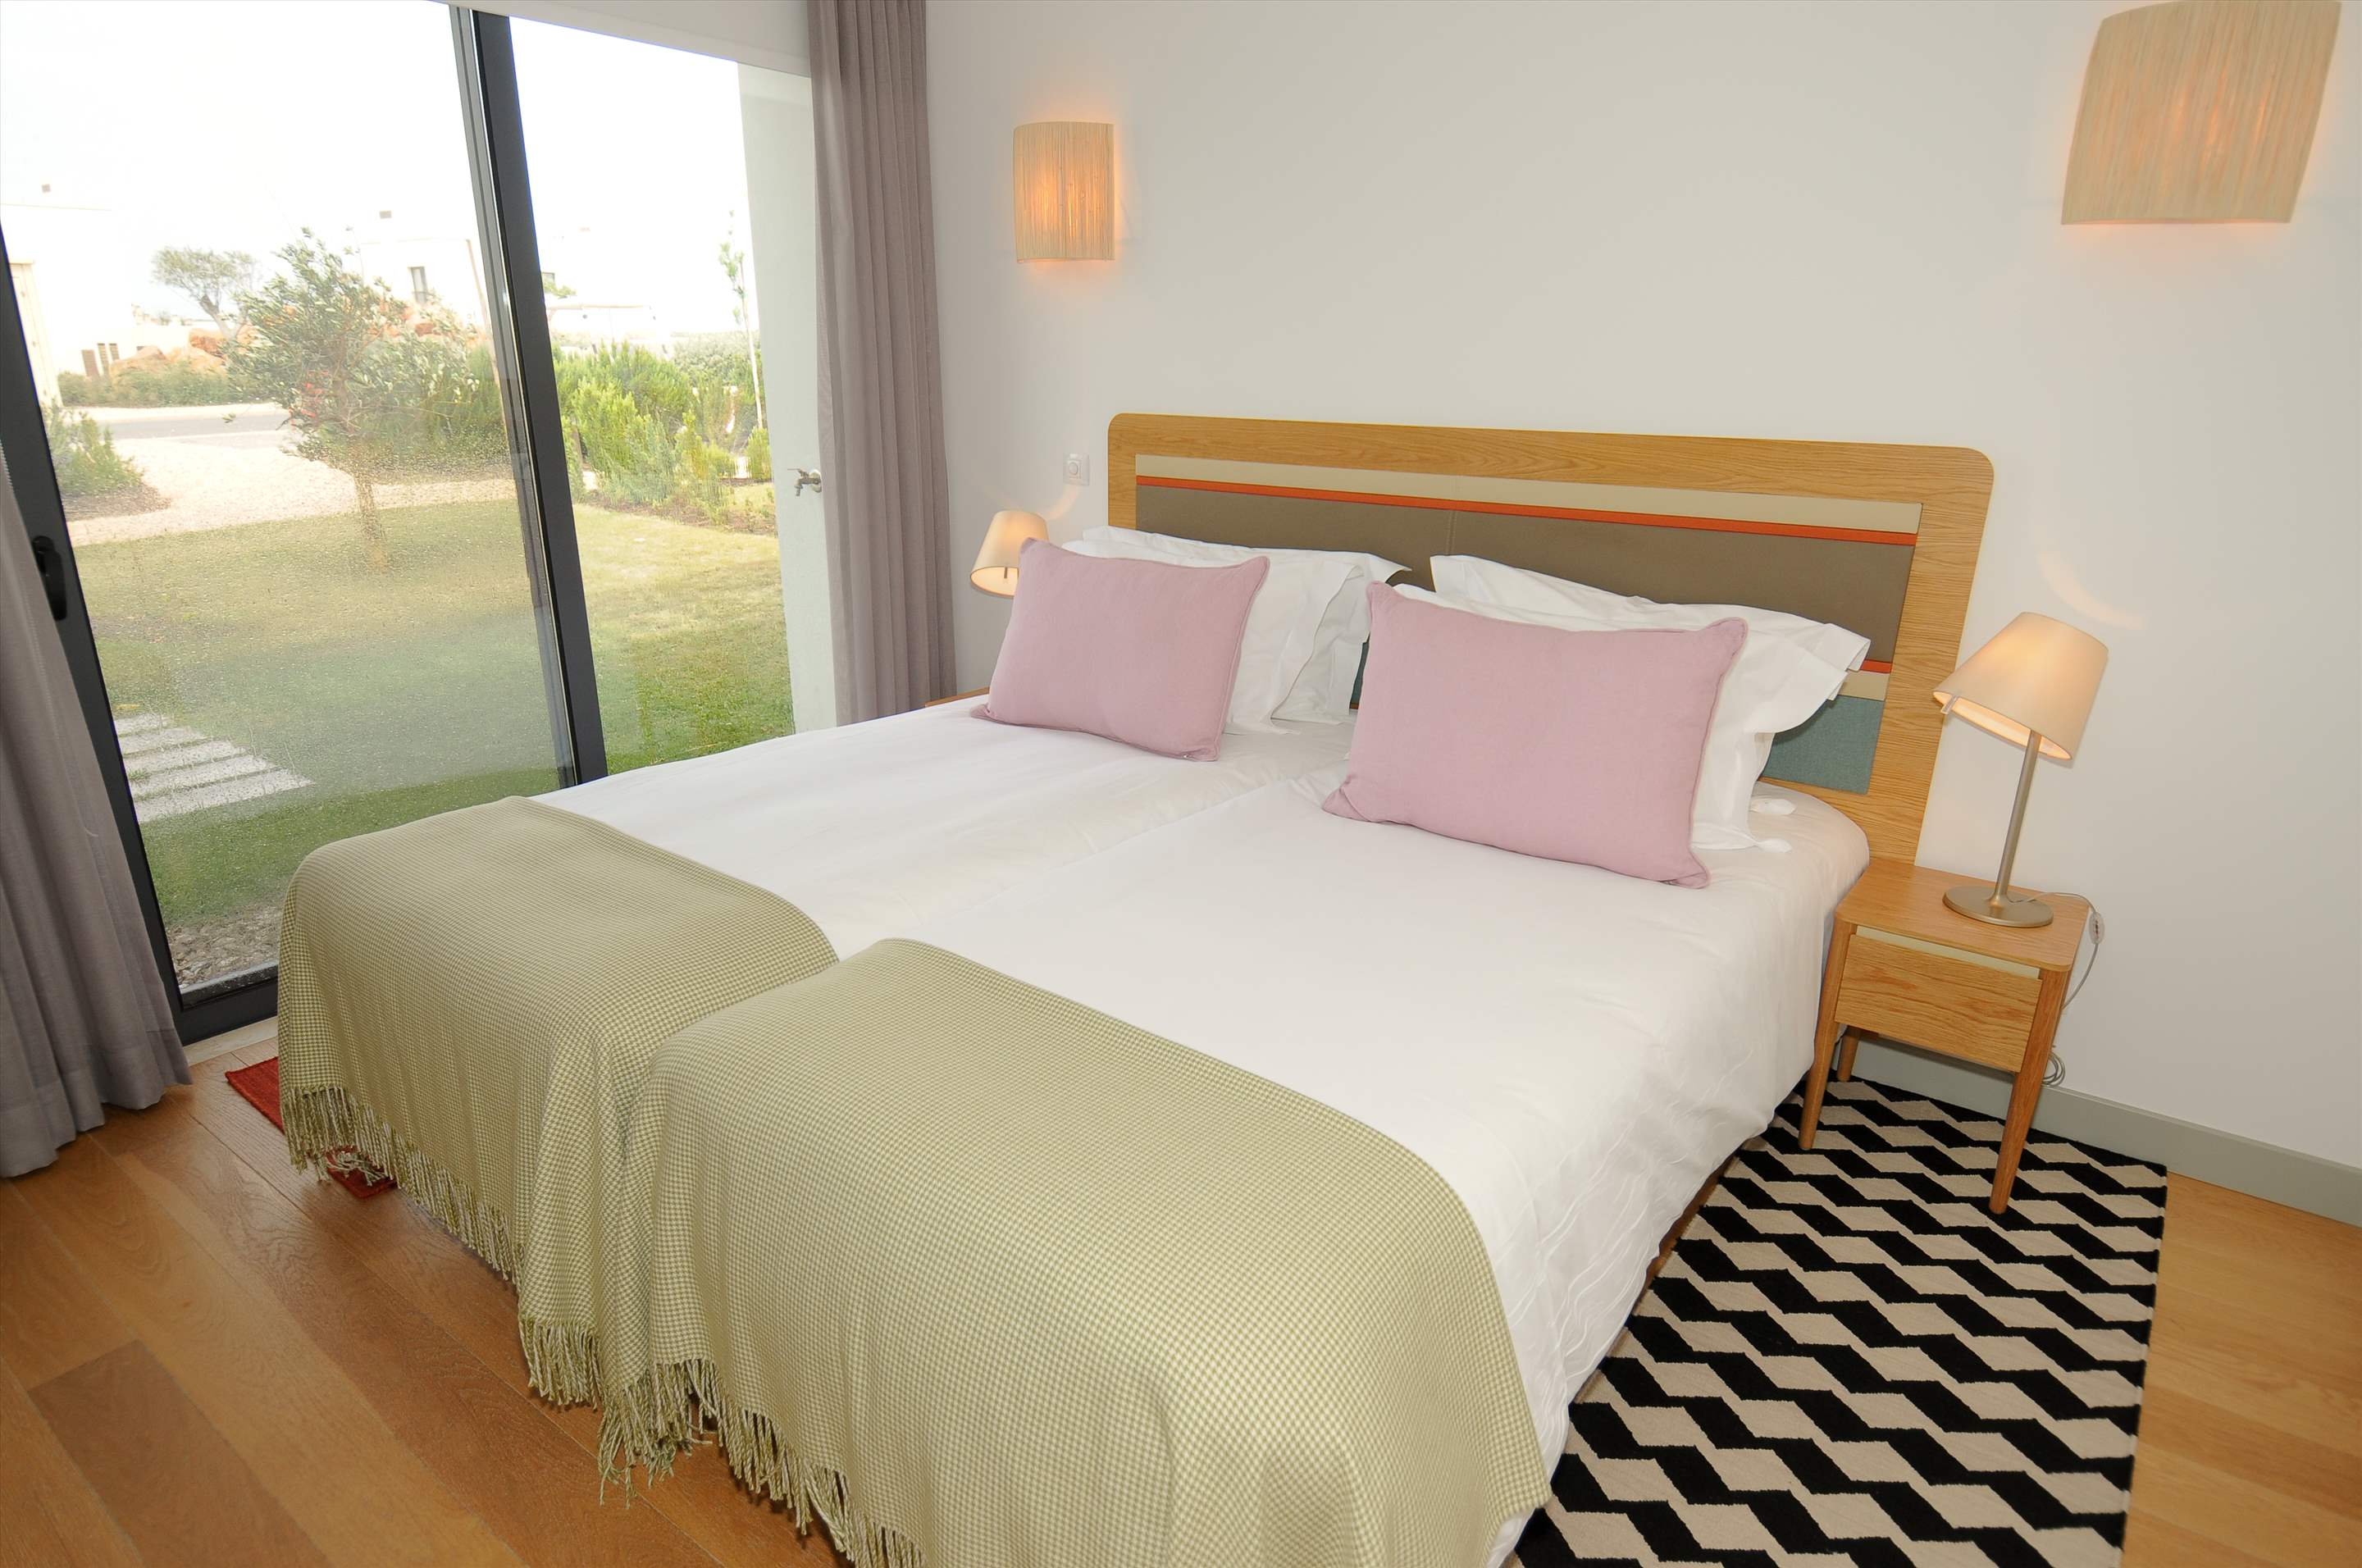 Martinhal Village Bay House, Grand Bay House Two Bedroom plus Bunk Bed, 2 bedroom villa in Martinhal Sagres, Algarve Photo #5